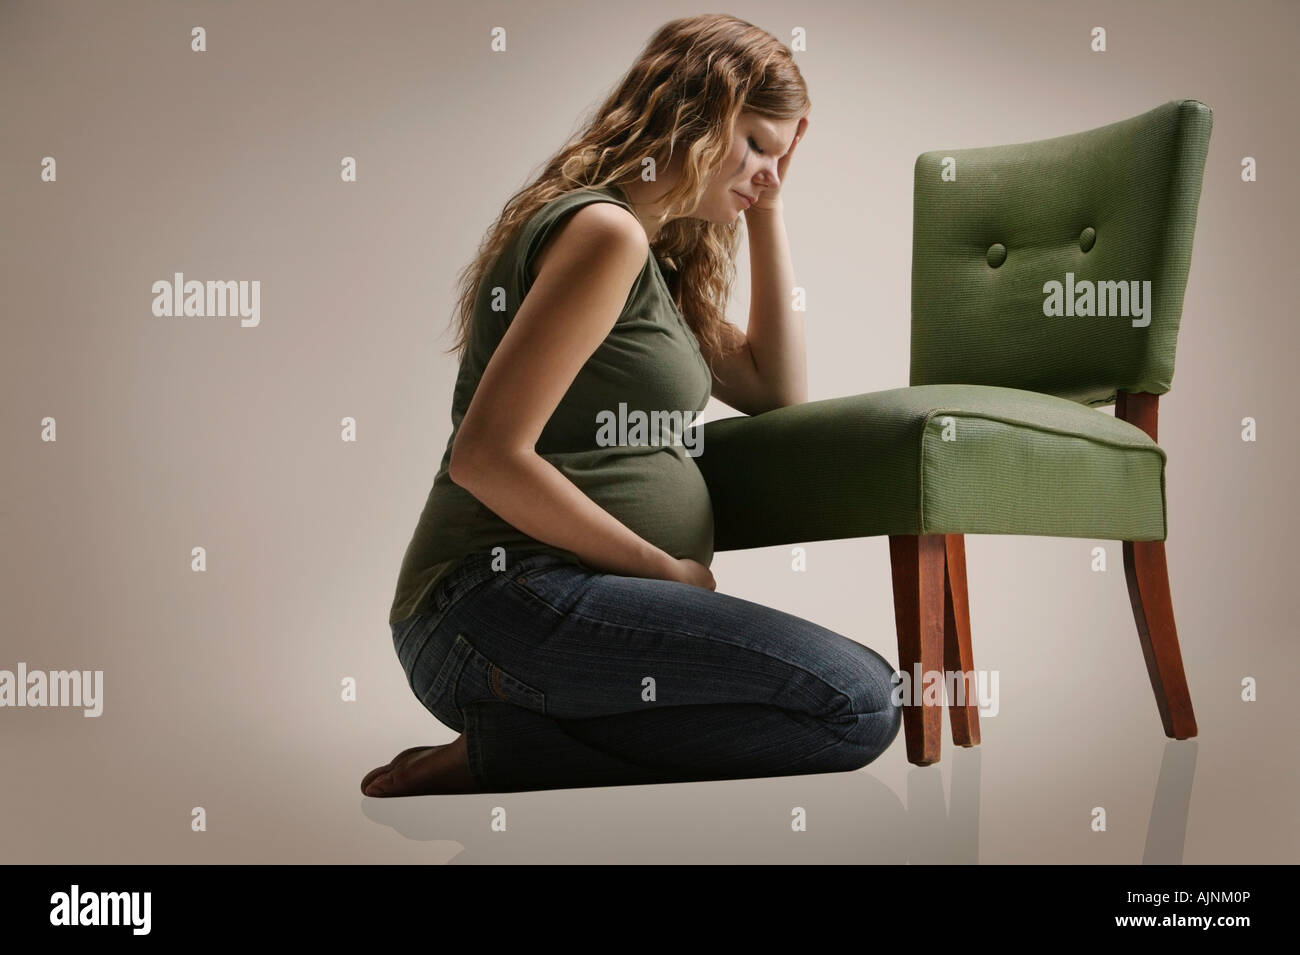 https://c8.alamy.com/comp/AJNM0P/a-sad-pregnant-woman-sitting-by-chair-AJNM0P.jpg